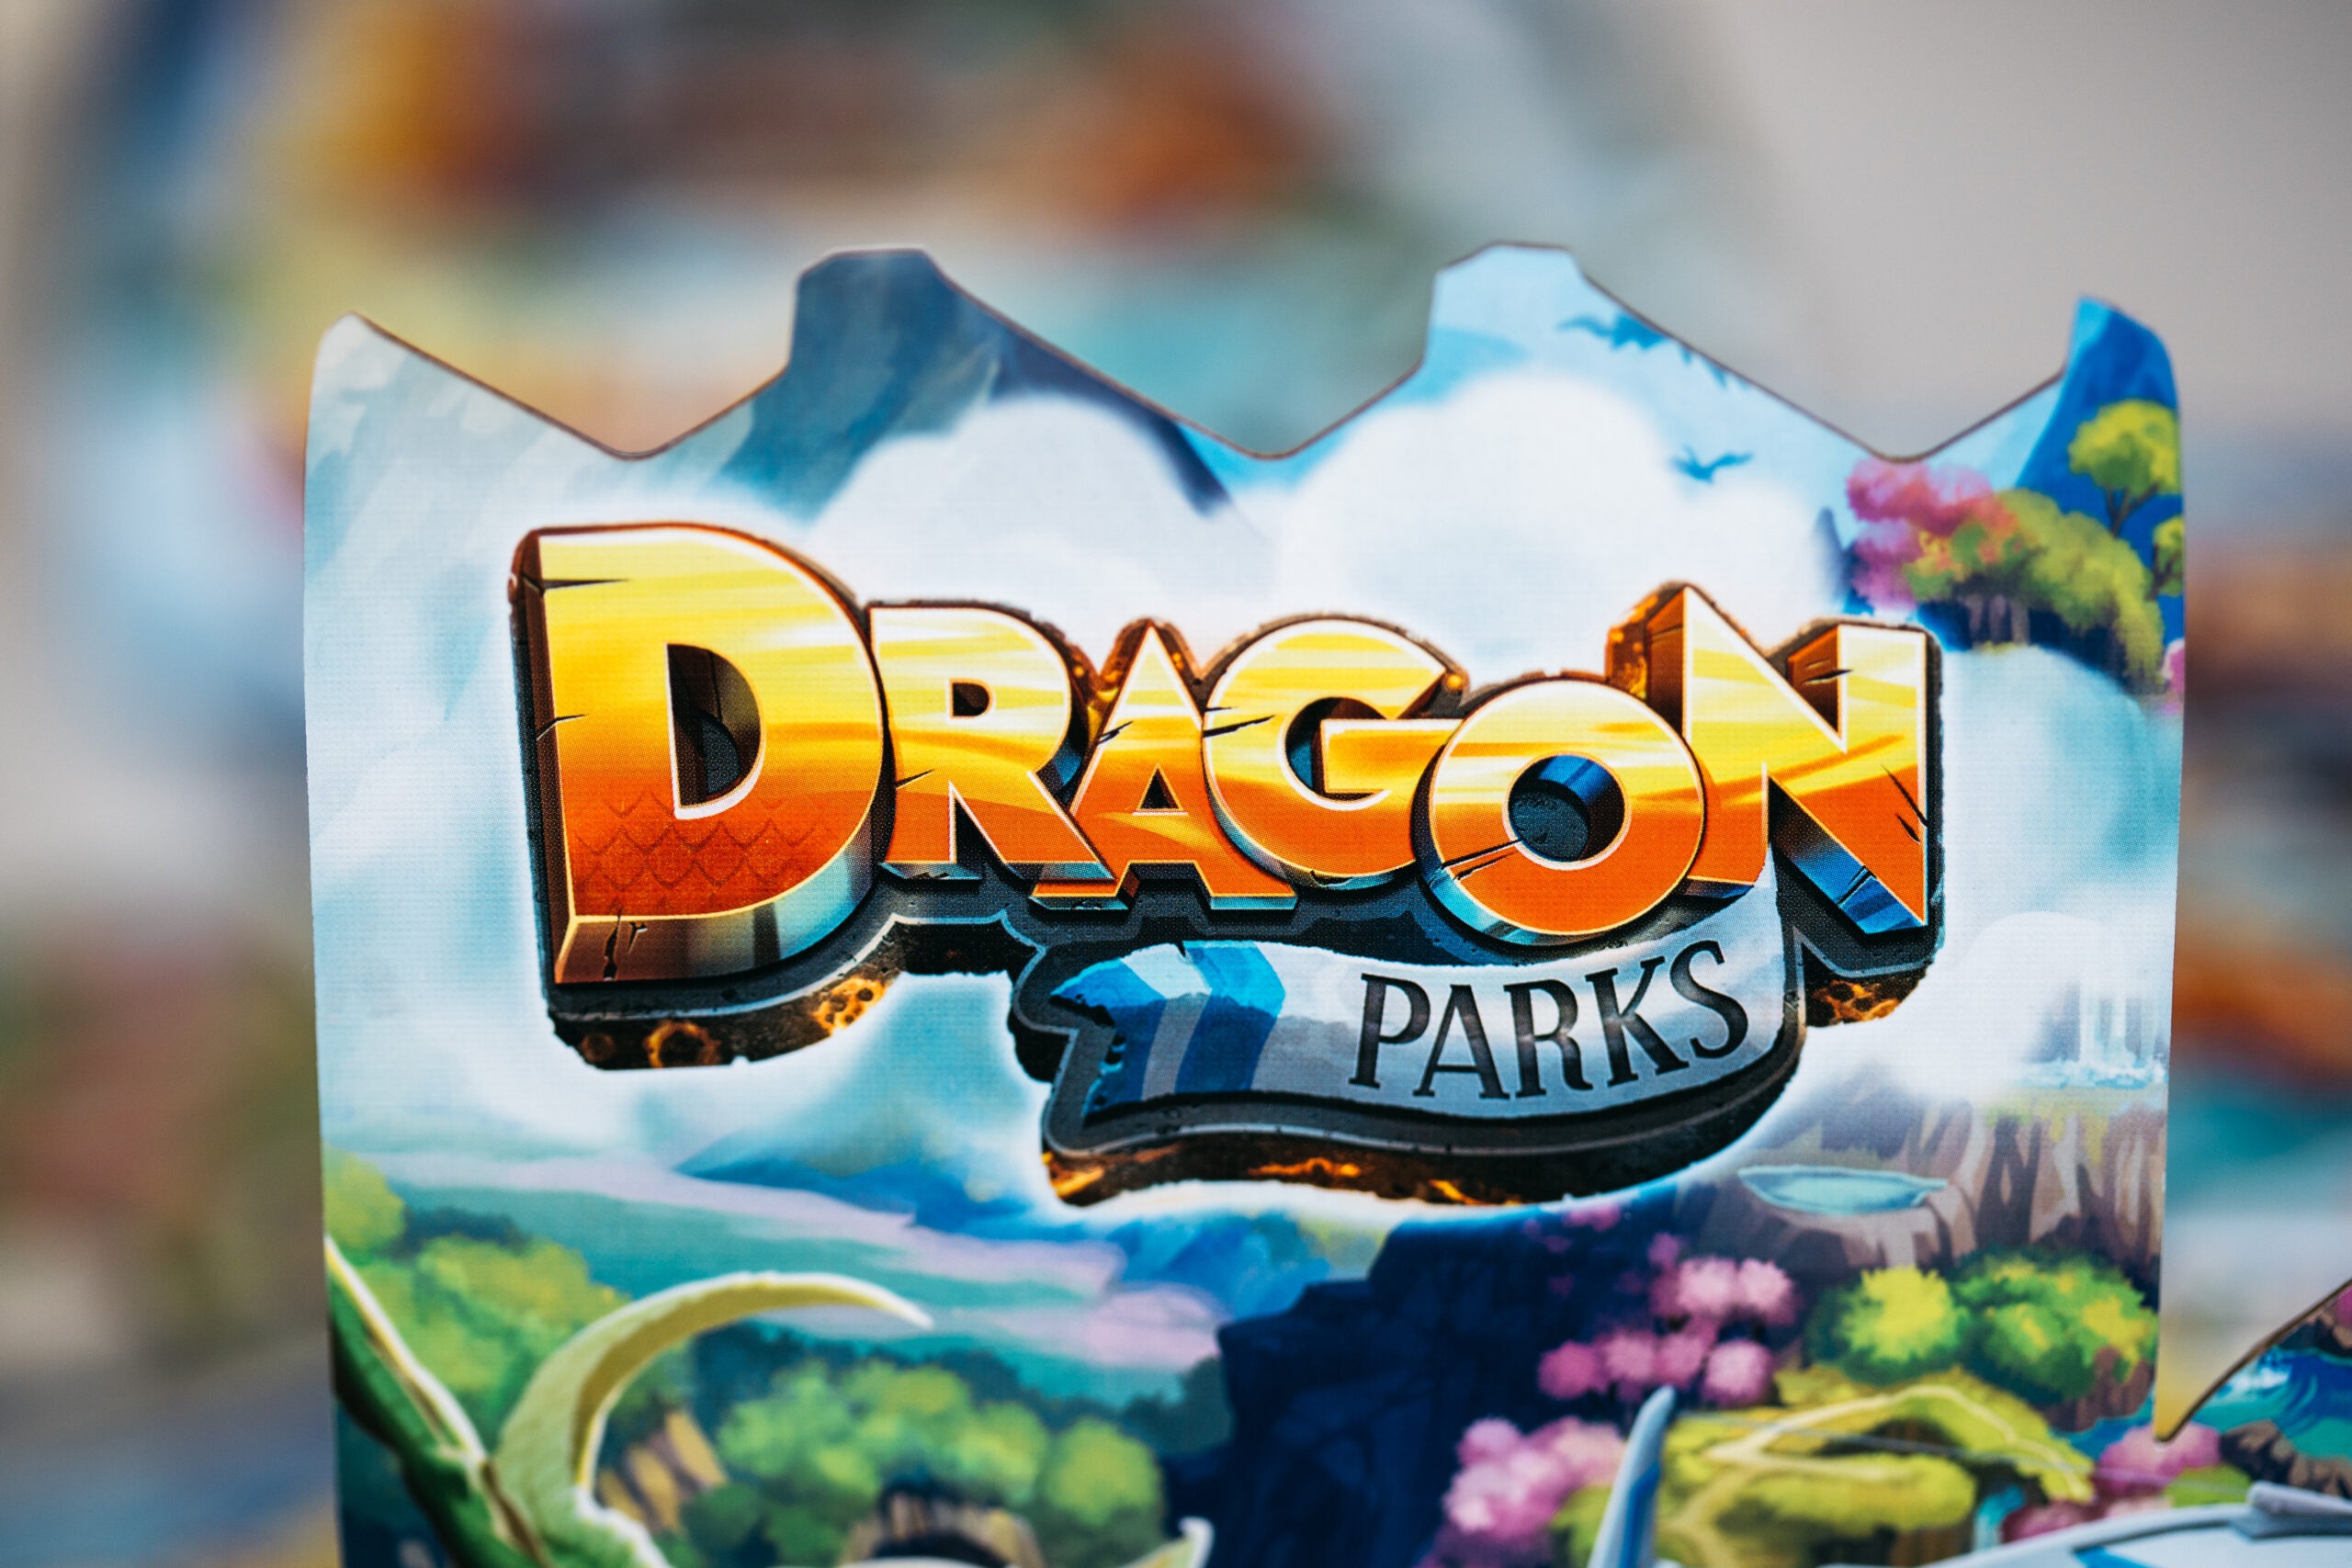 Dragon parks ankama jeu de société